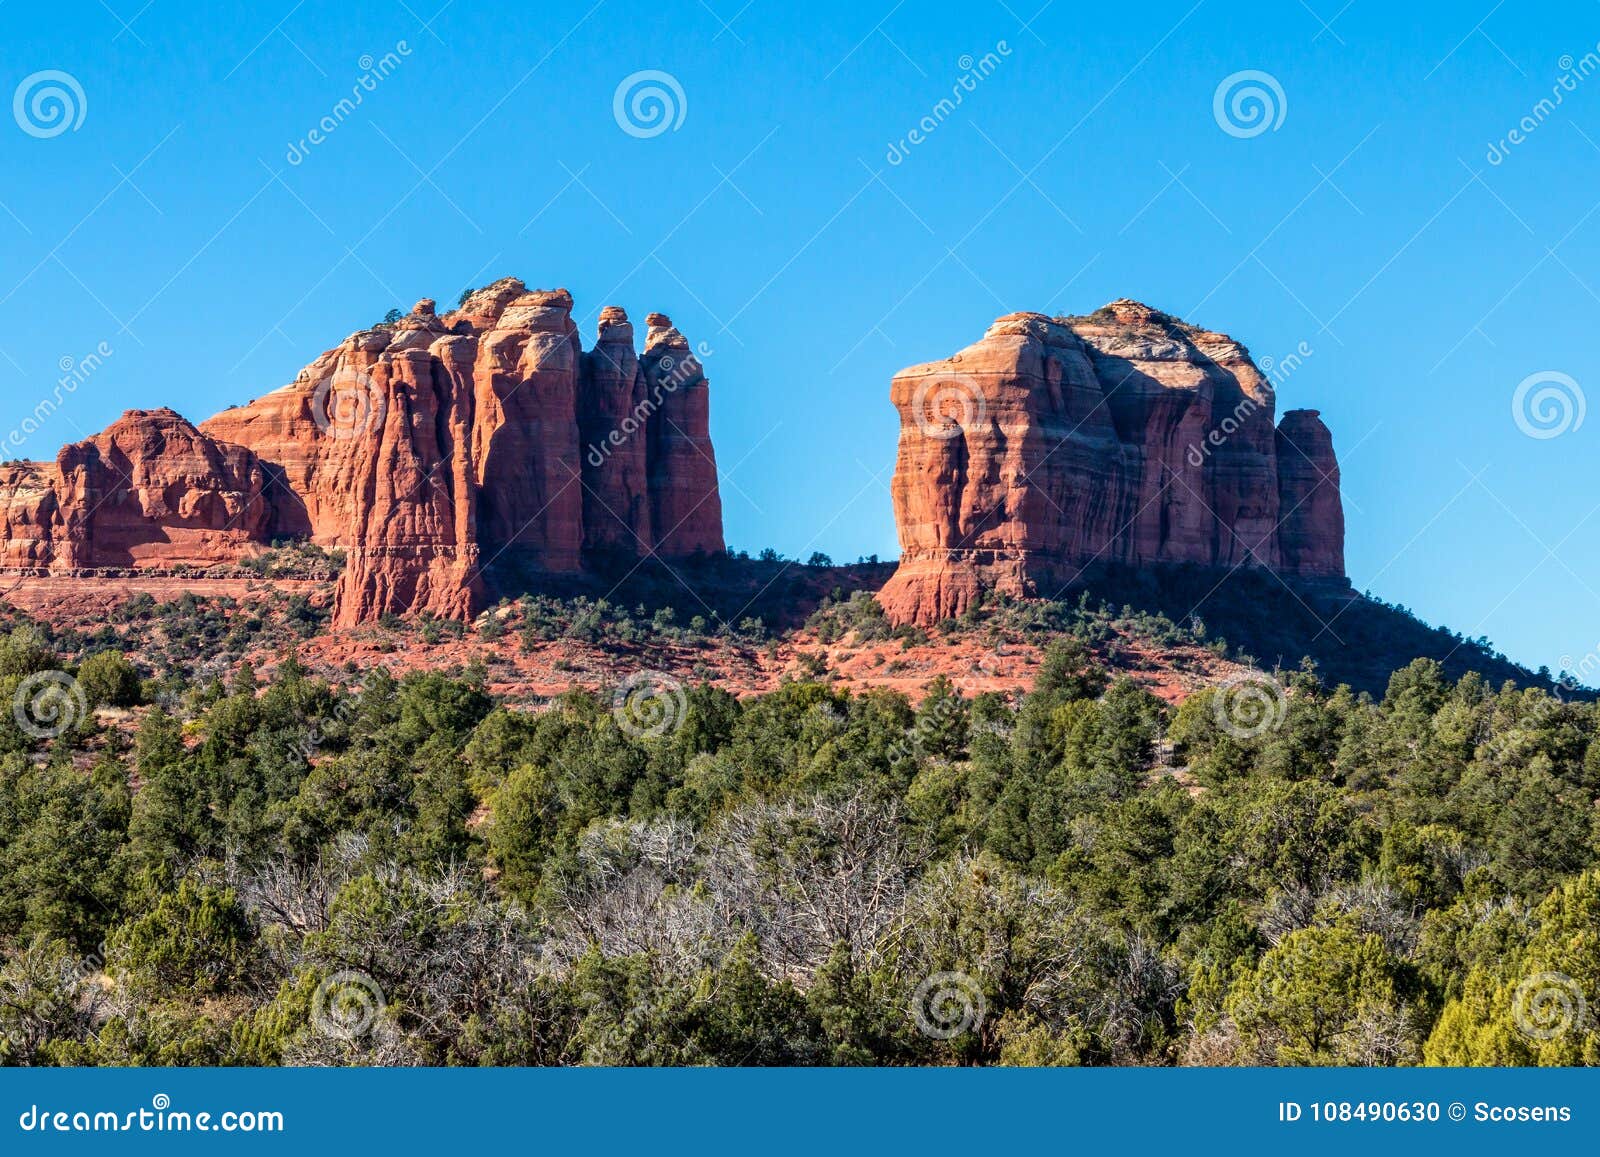 Sedona Red Rock Scenic Landscape Stock Photo - Image of rocks, nature ...